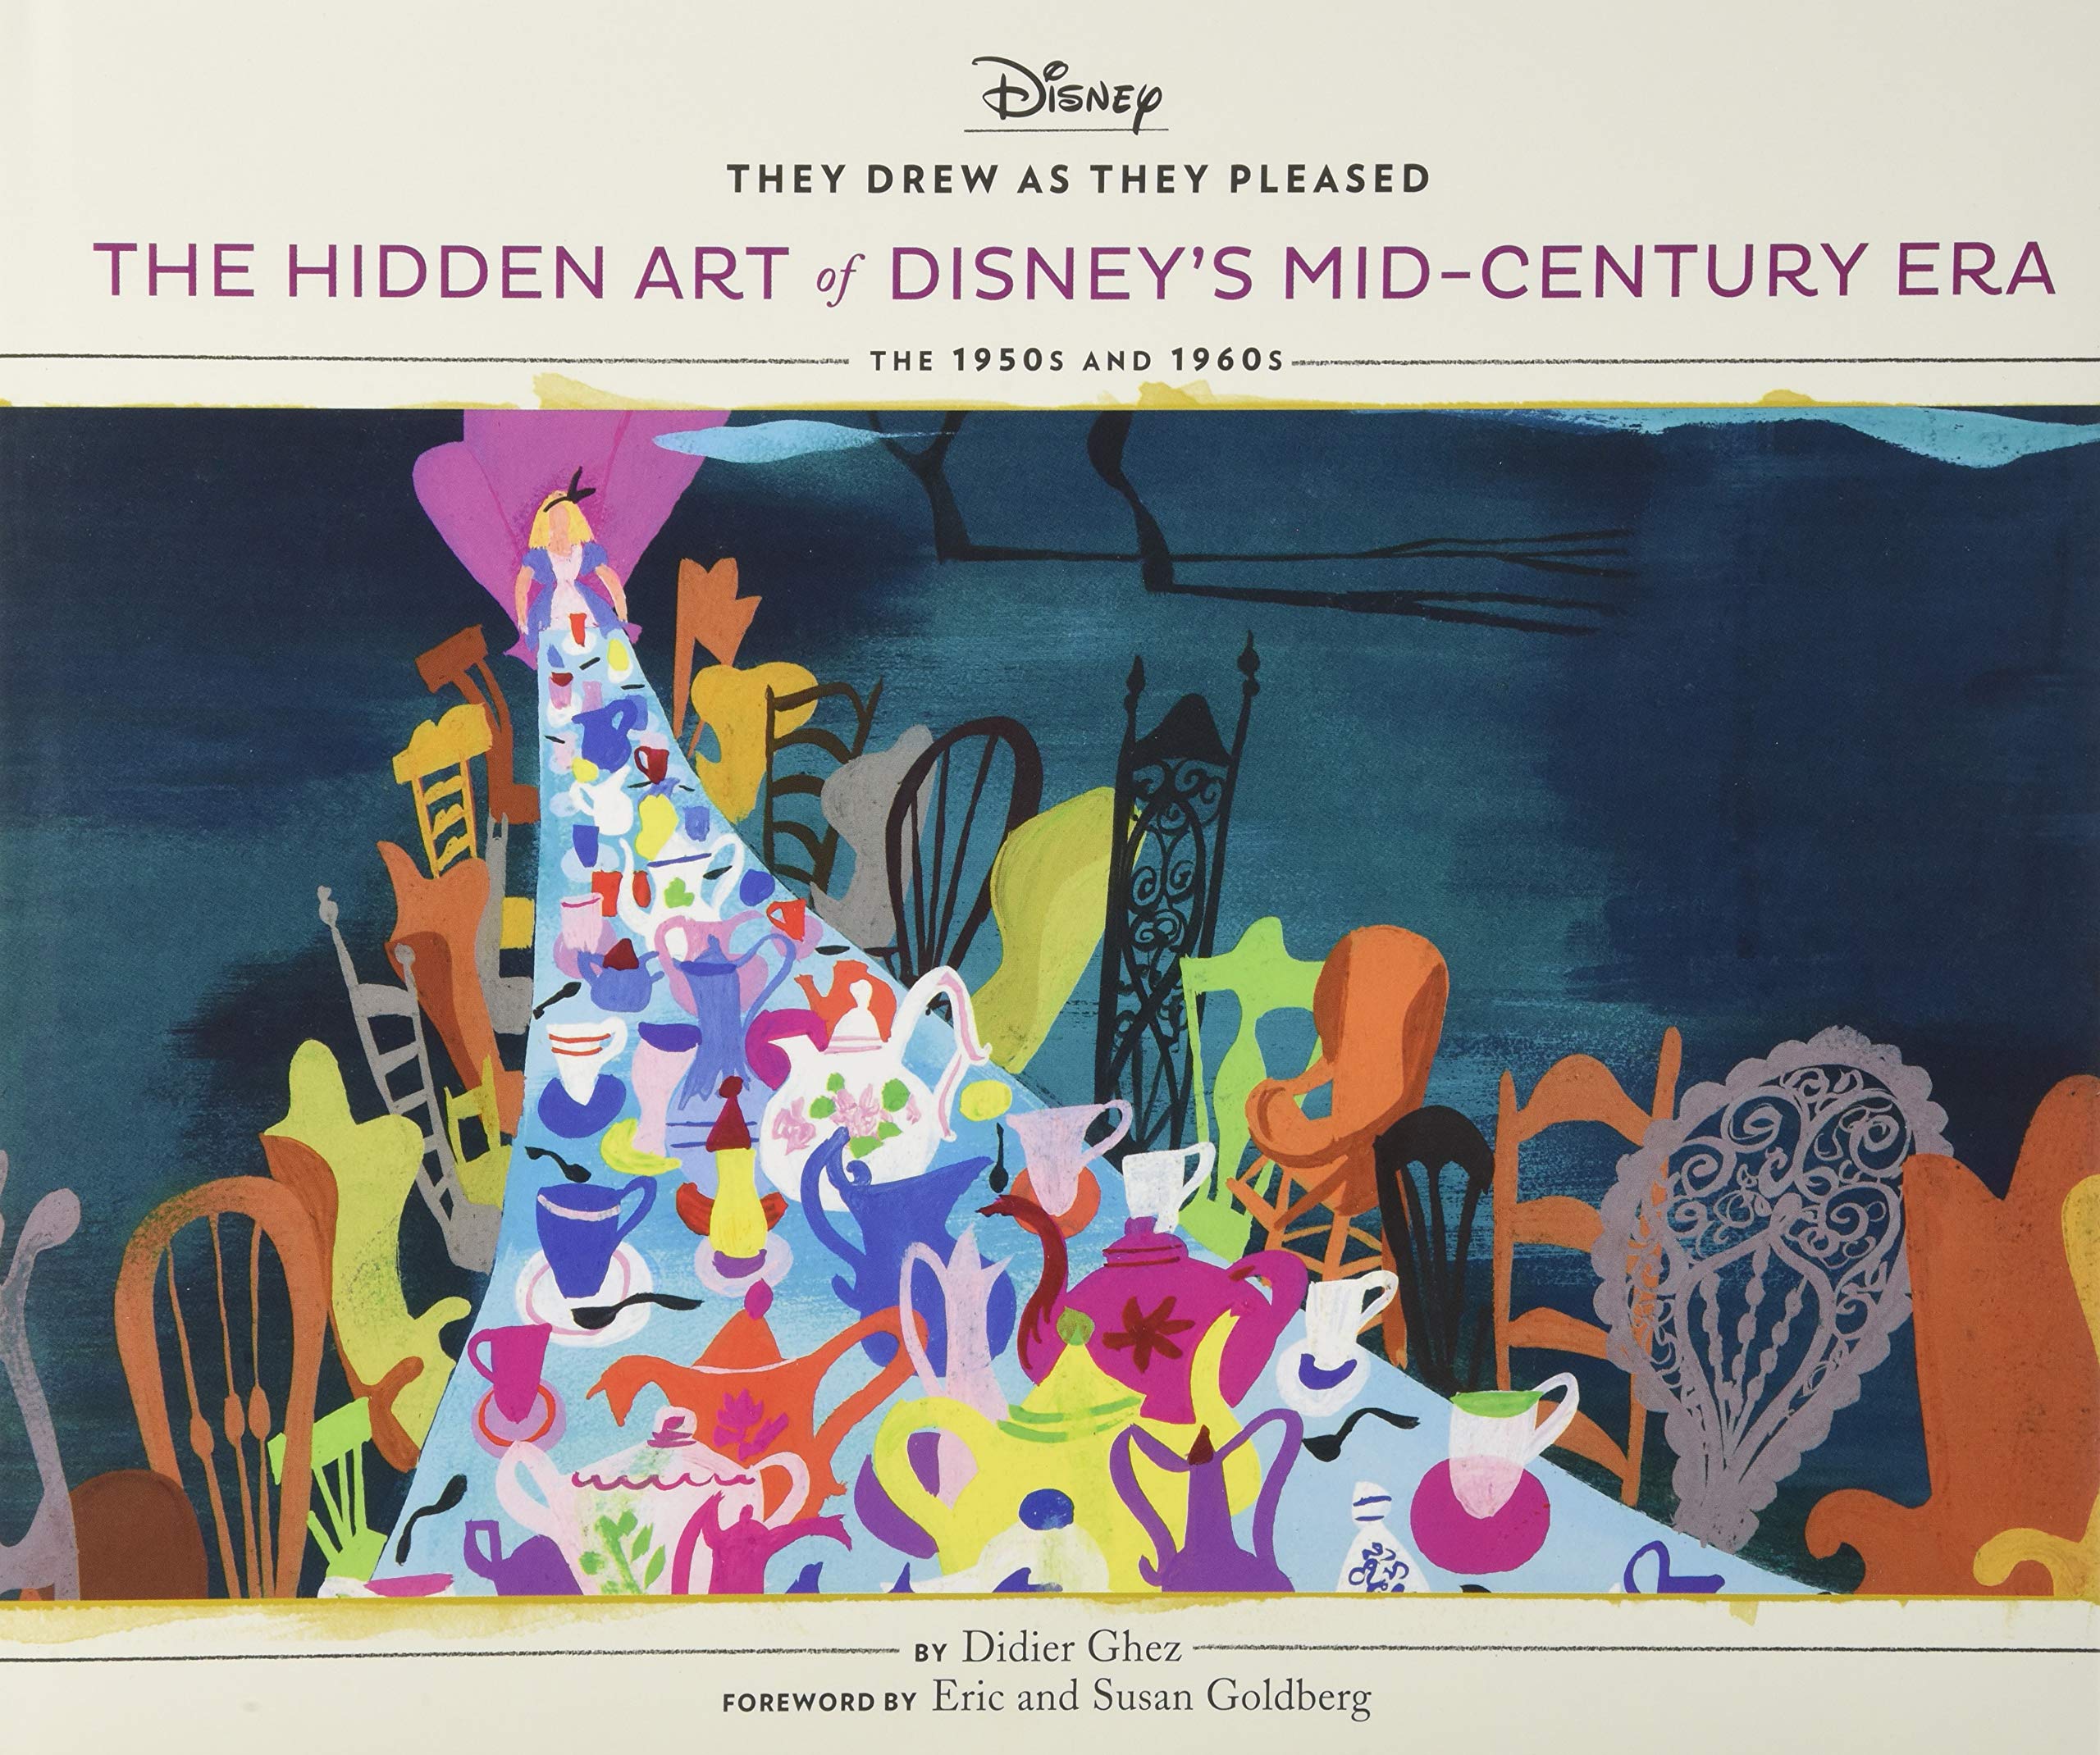 The hidden art of Disney's mid-century era The 1950s and 1960s